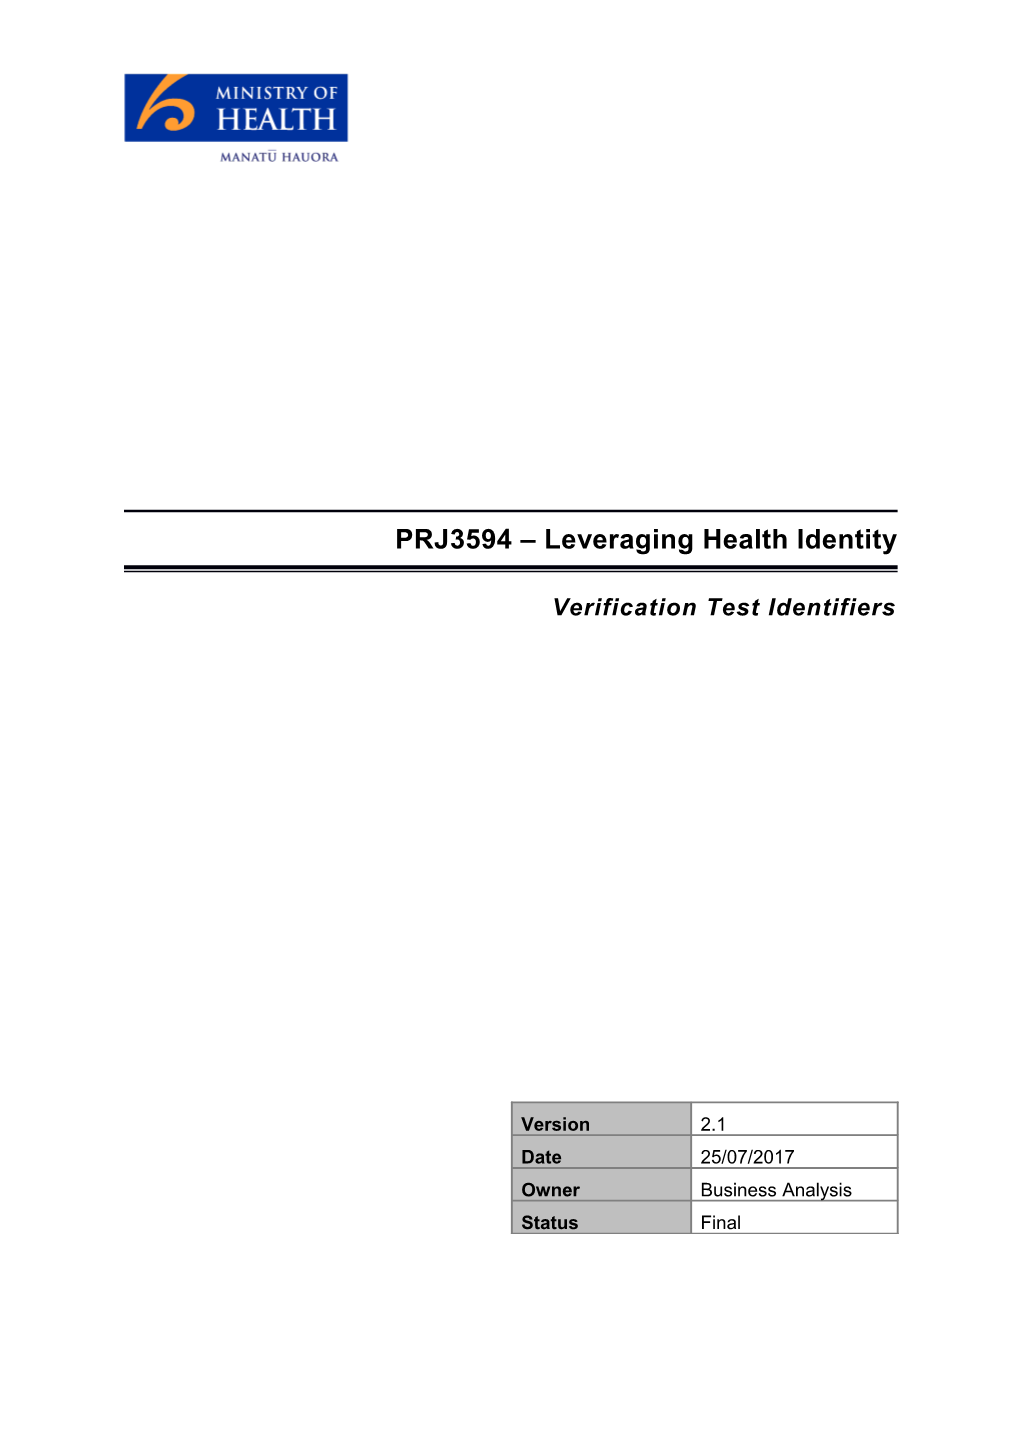 PRJ3594 Leveraging Health Identity